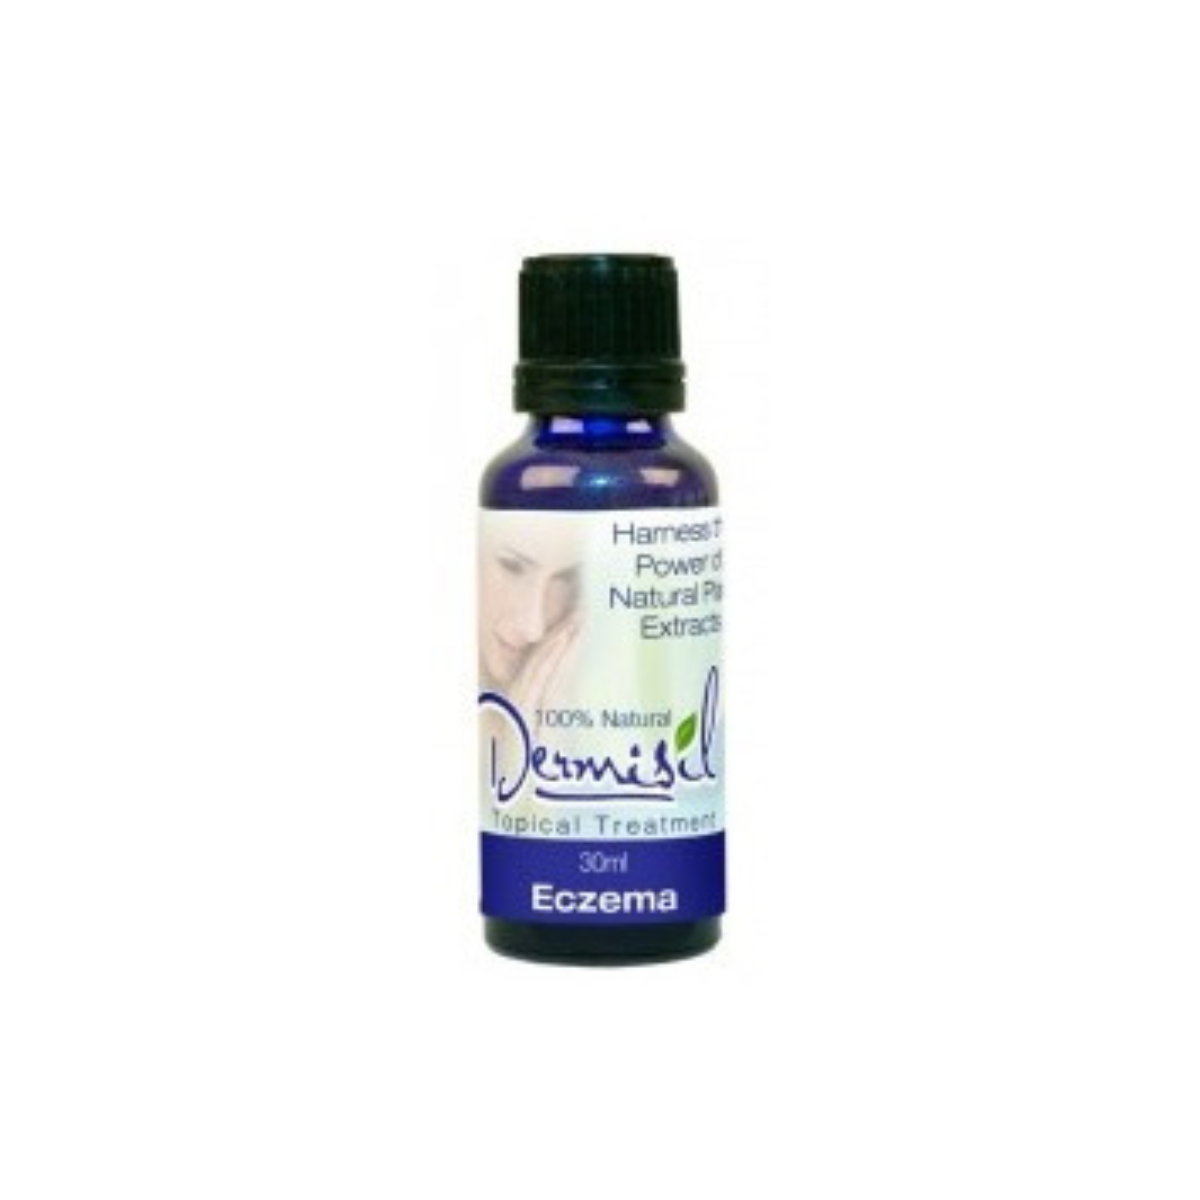 Eczema Oil Blend